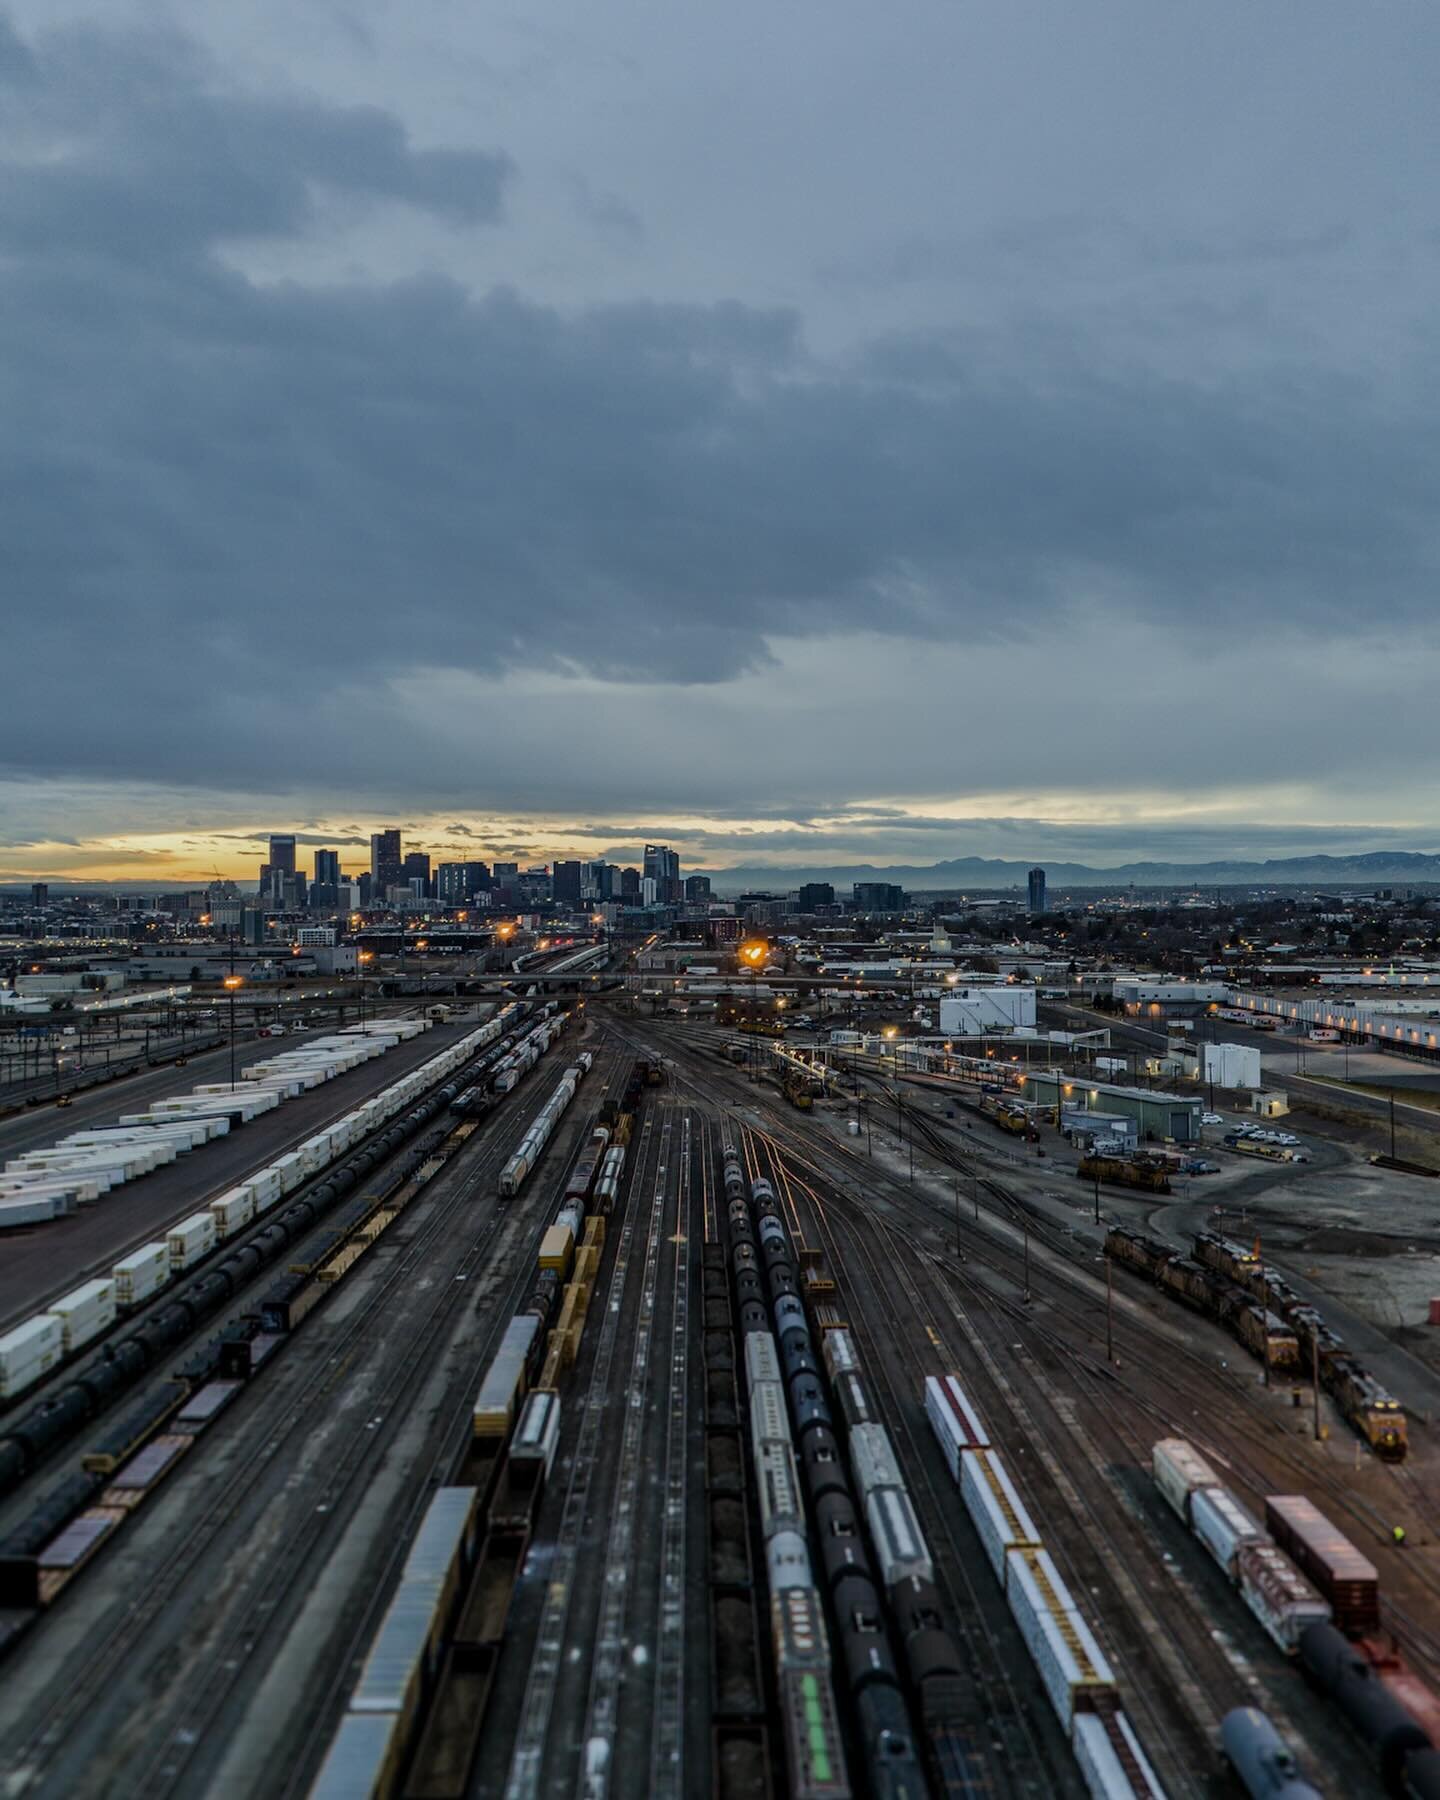 Morning light @the trainyard. #trainyard #sunrise #aerialphotography